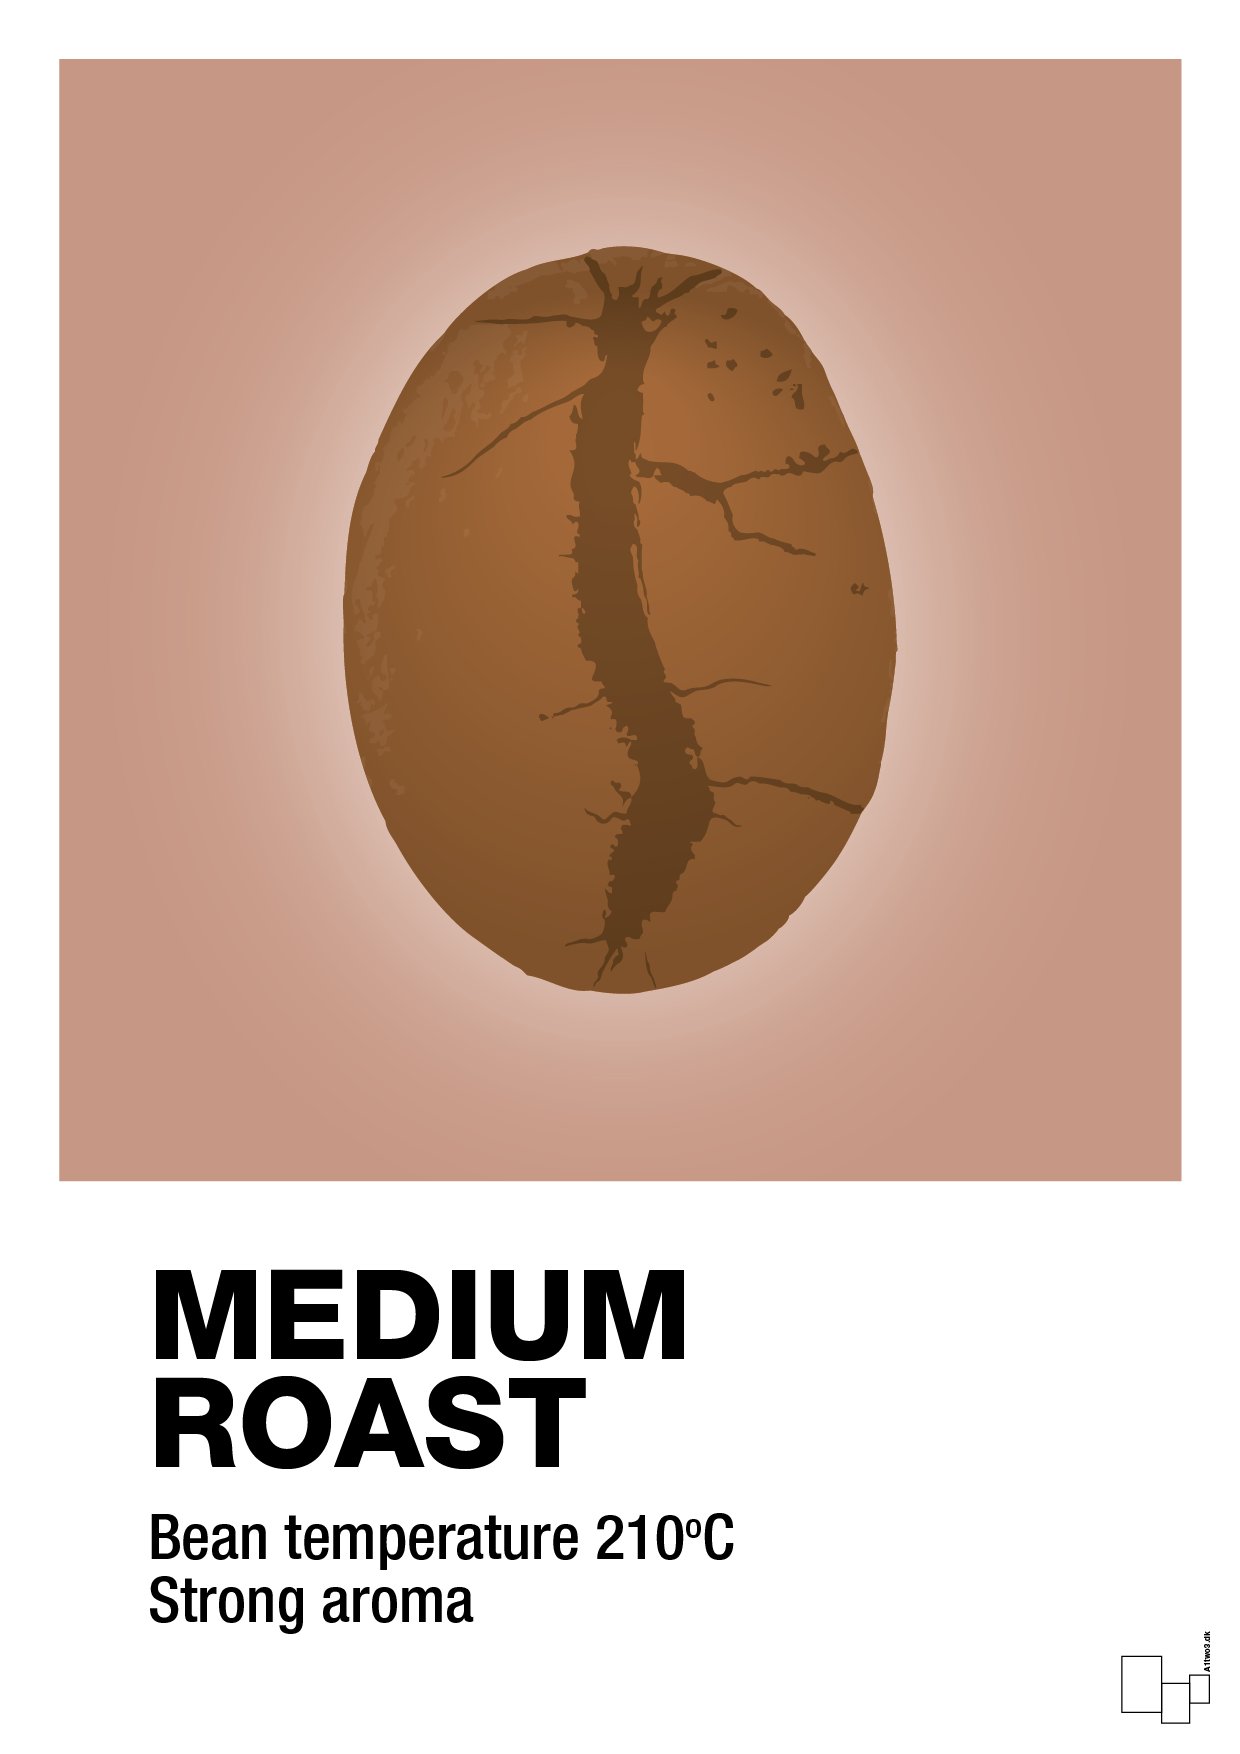 medium roast - Plakat med Mad & Drikke i Powder